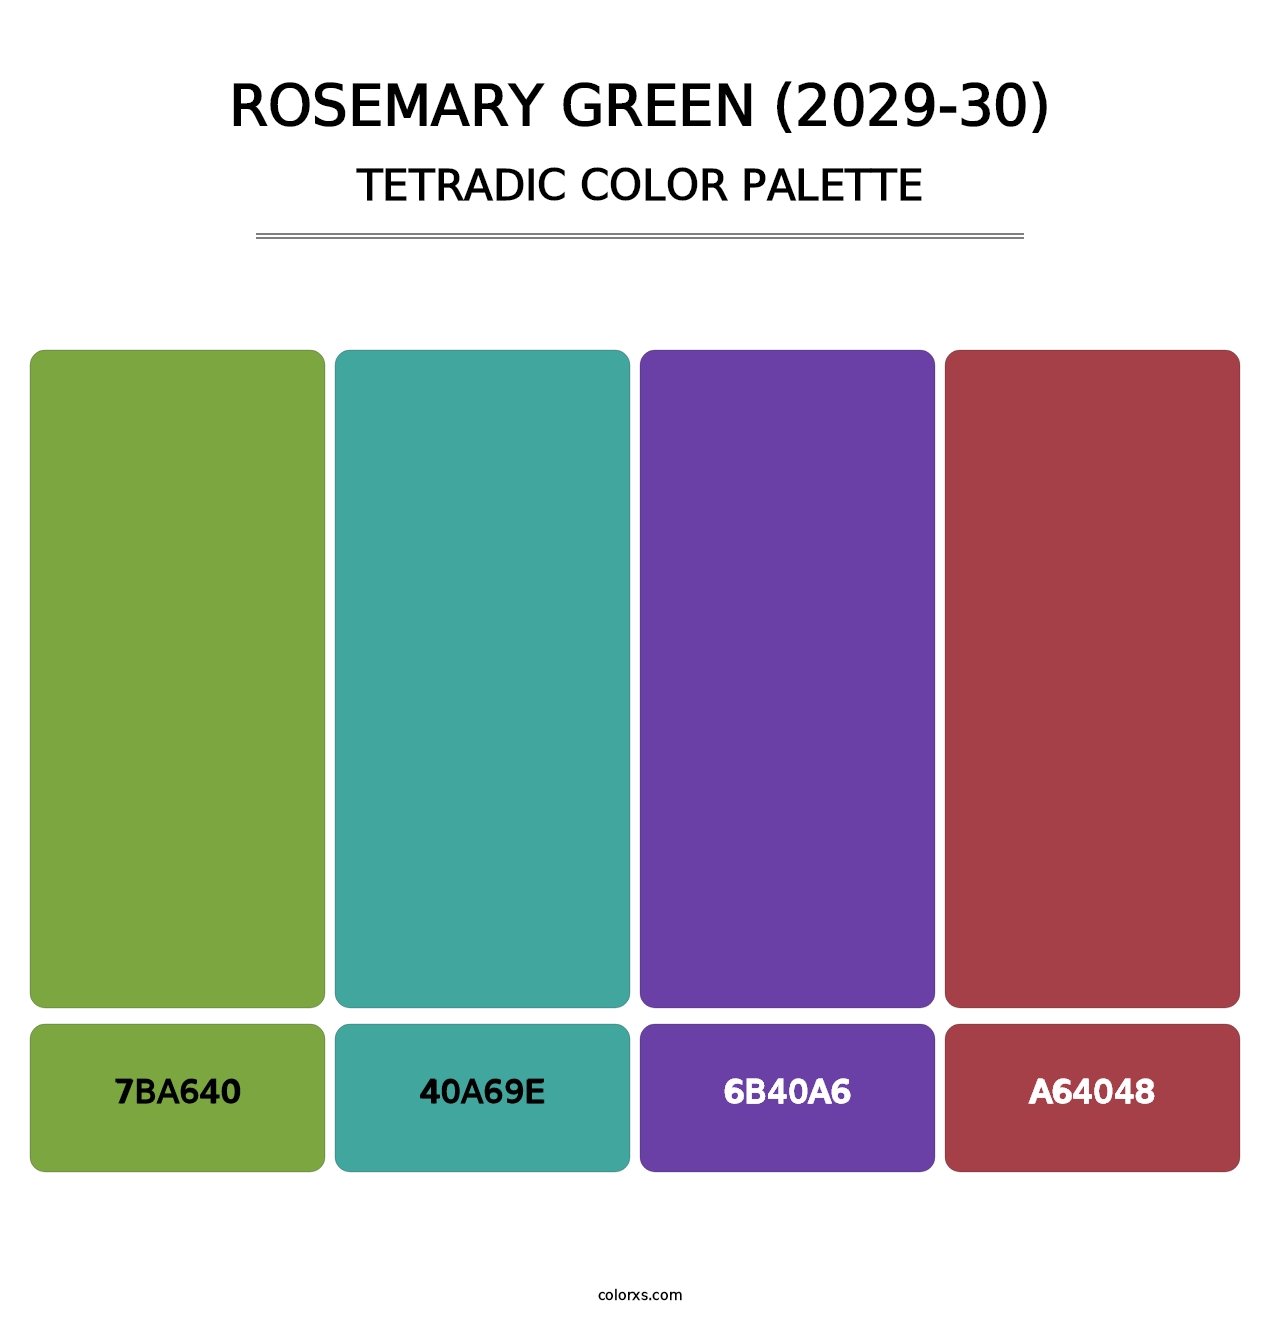 Rosemary Green (2029-30) - Tetradic Color Palette